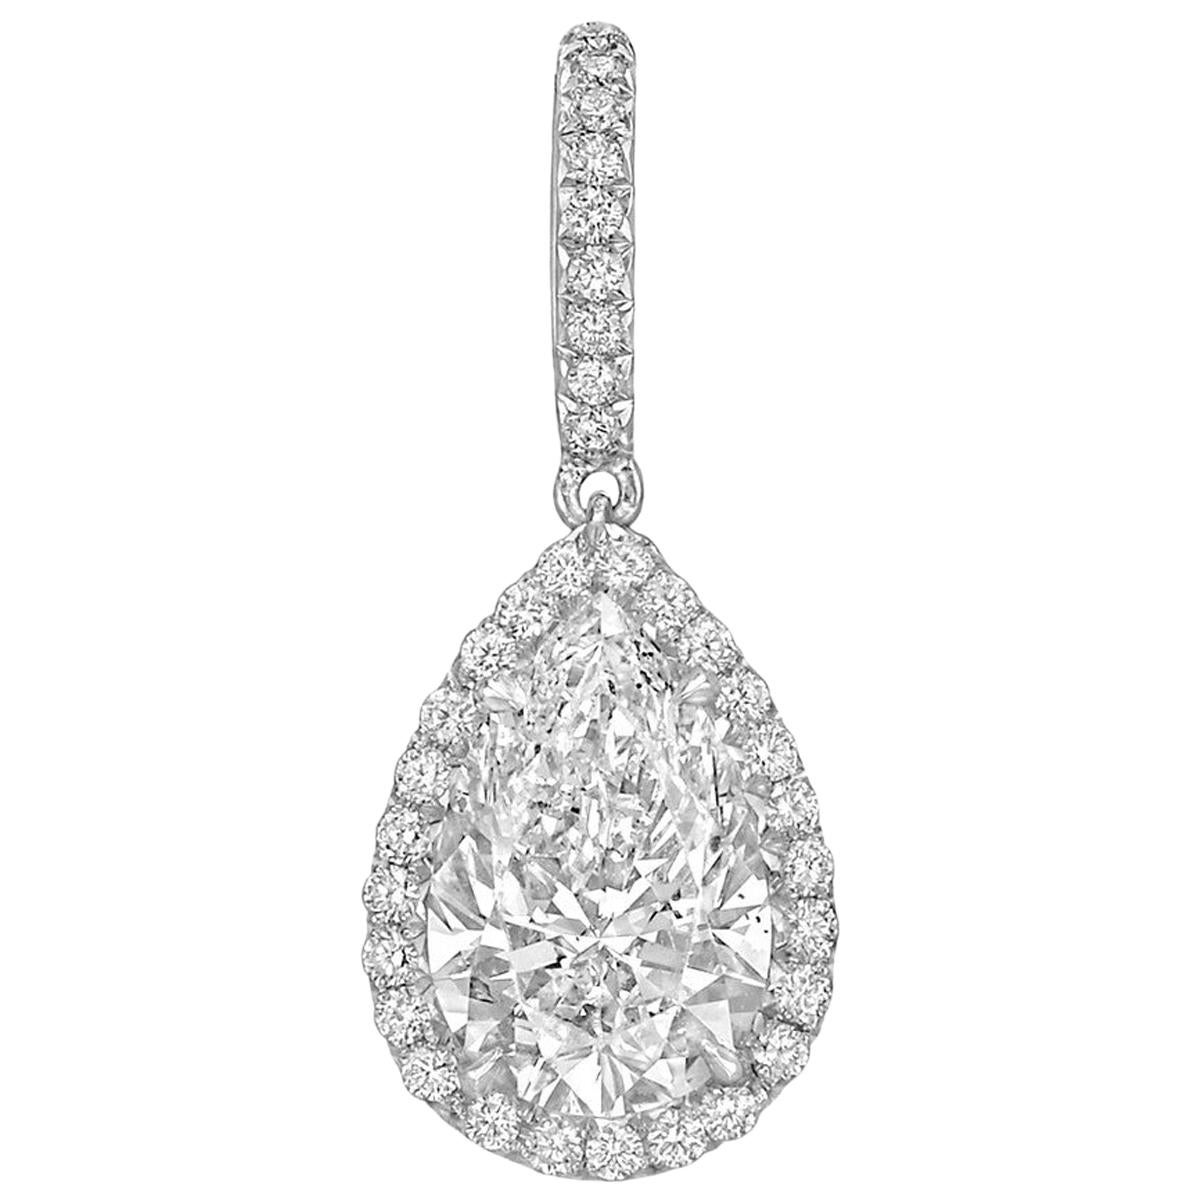 3.01 Carat Pear Brilliant Diamond "Oriana" Pendant For Sale